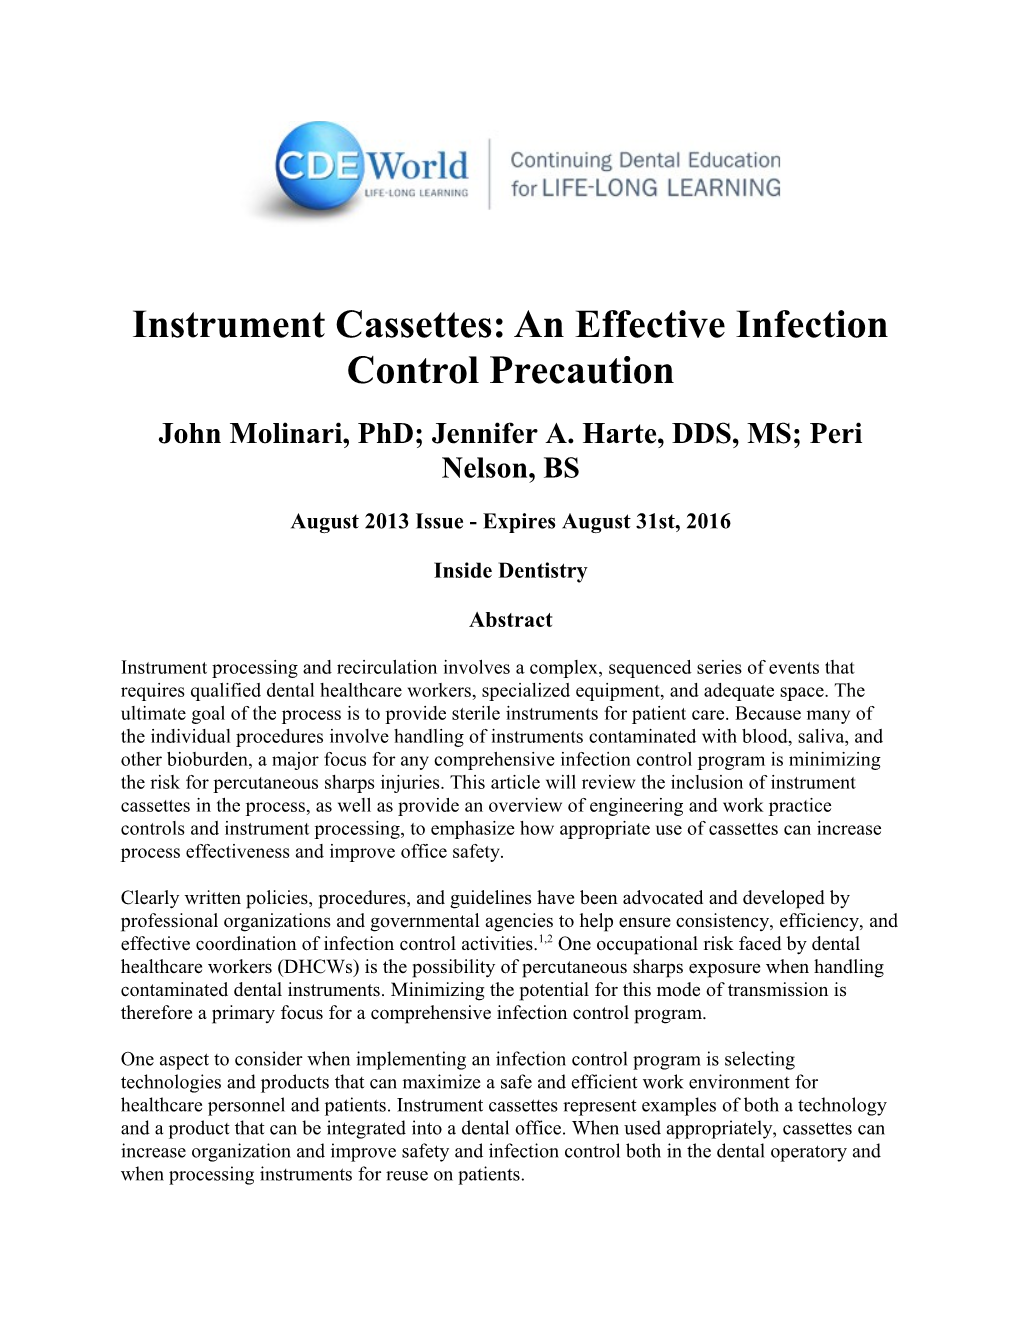 Instrument Cassettes: an Effective Infection Control Precaution